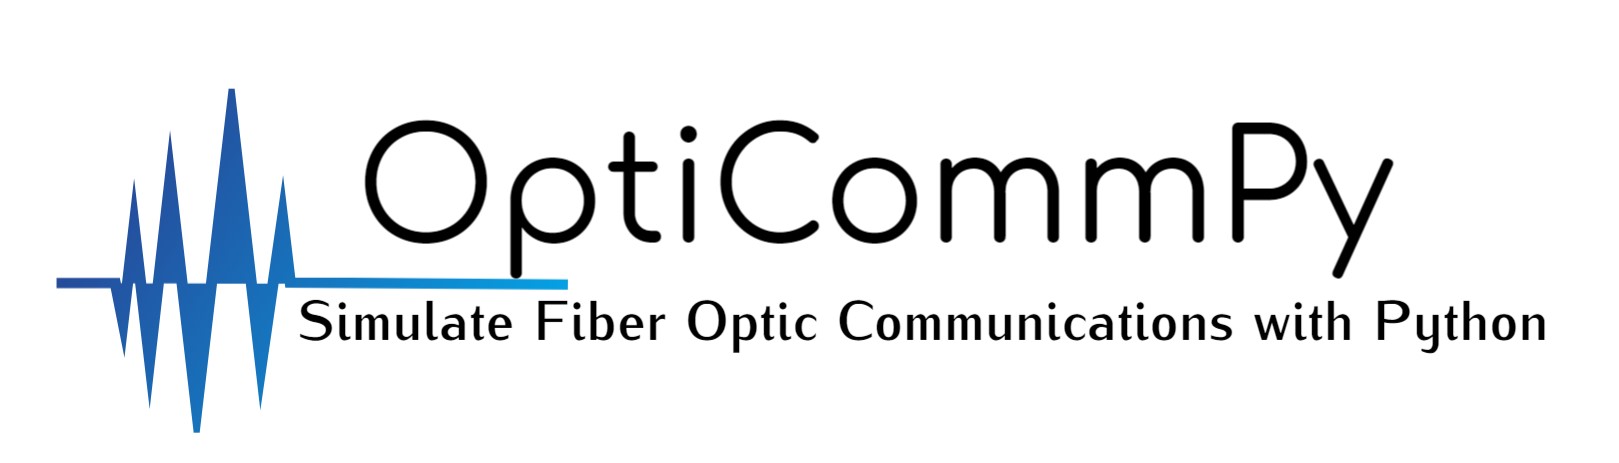 logo_OptiCommPy.jpg